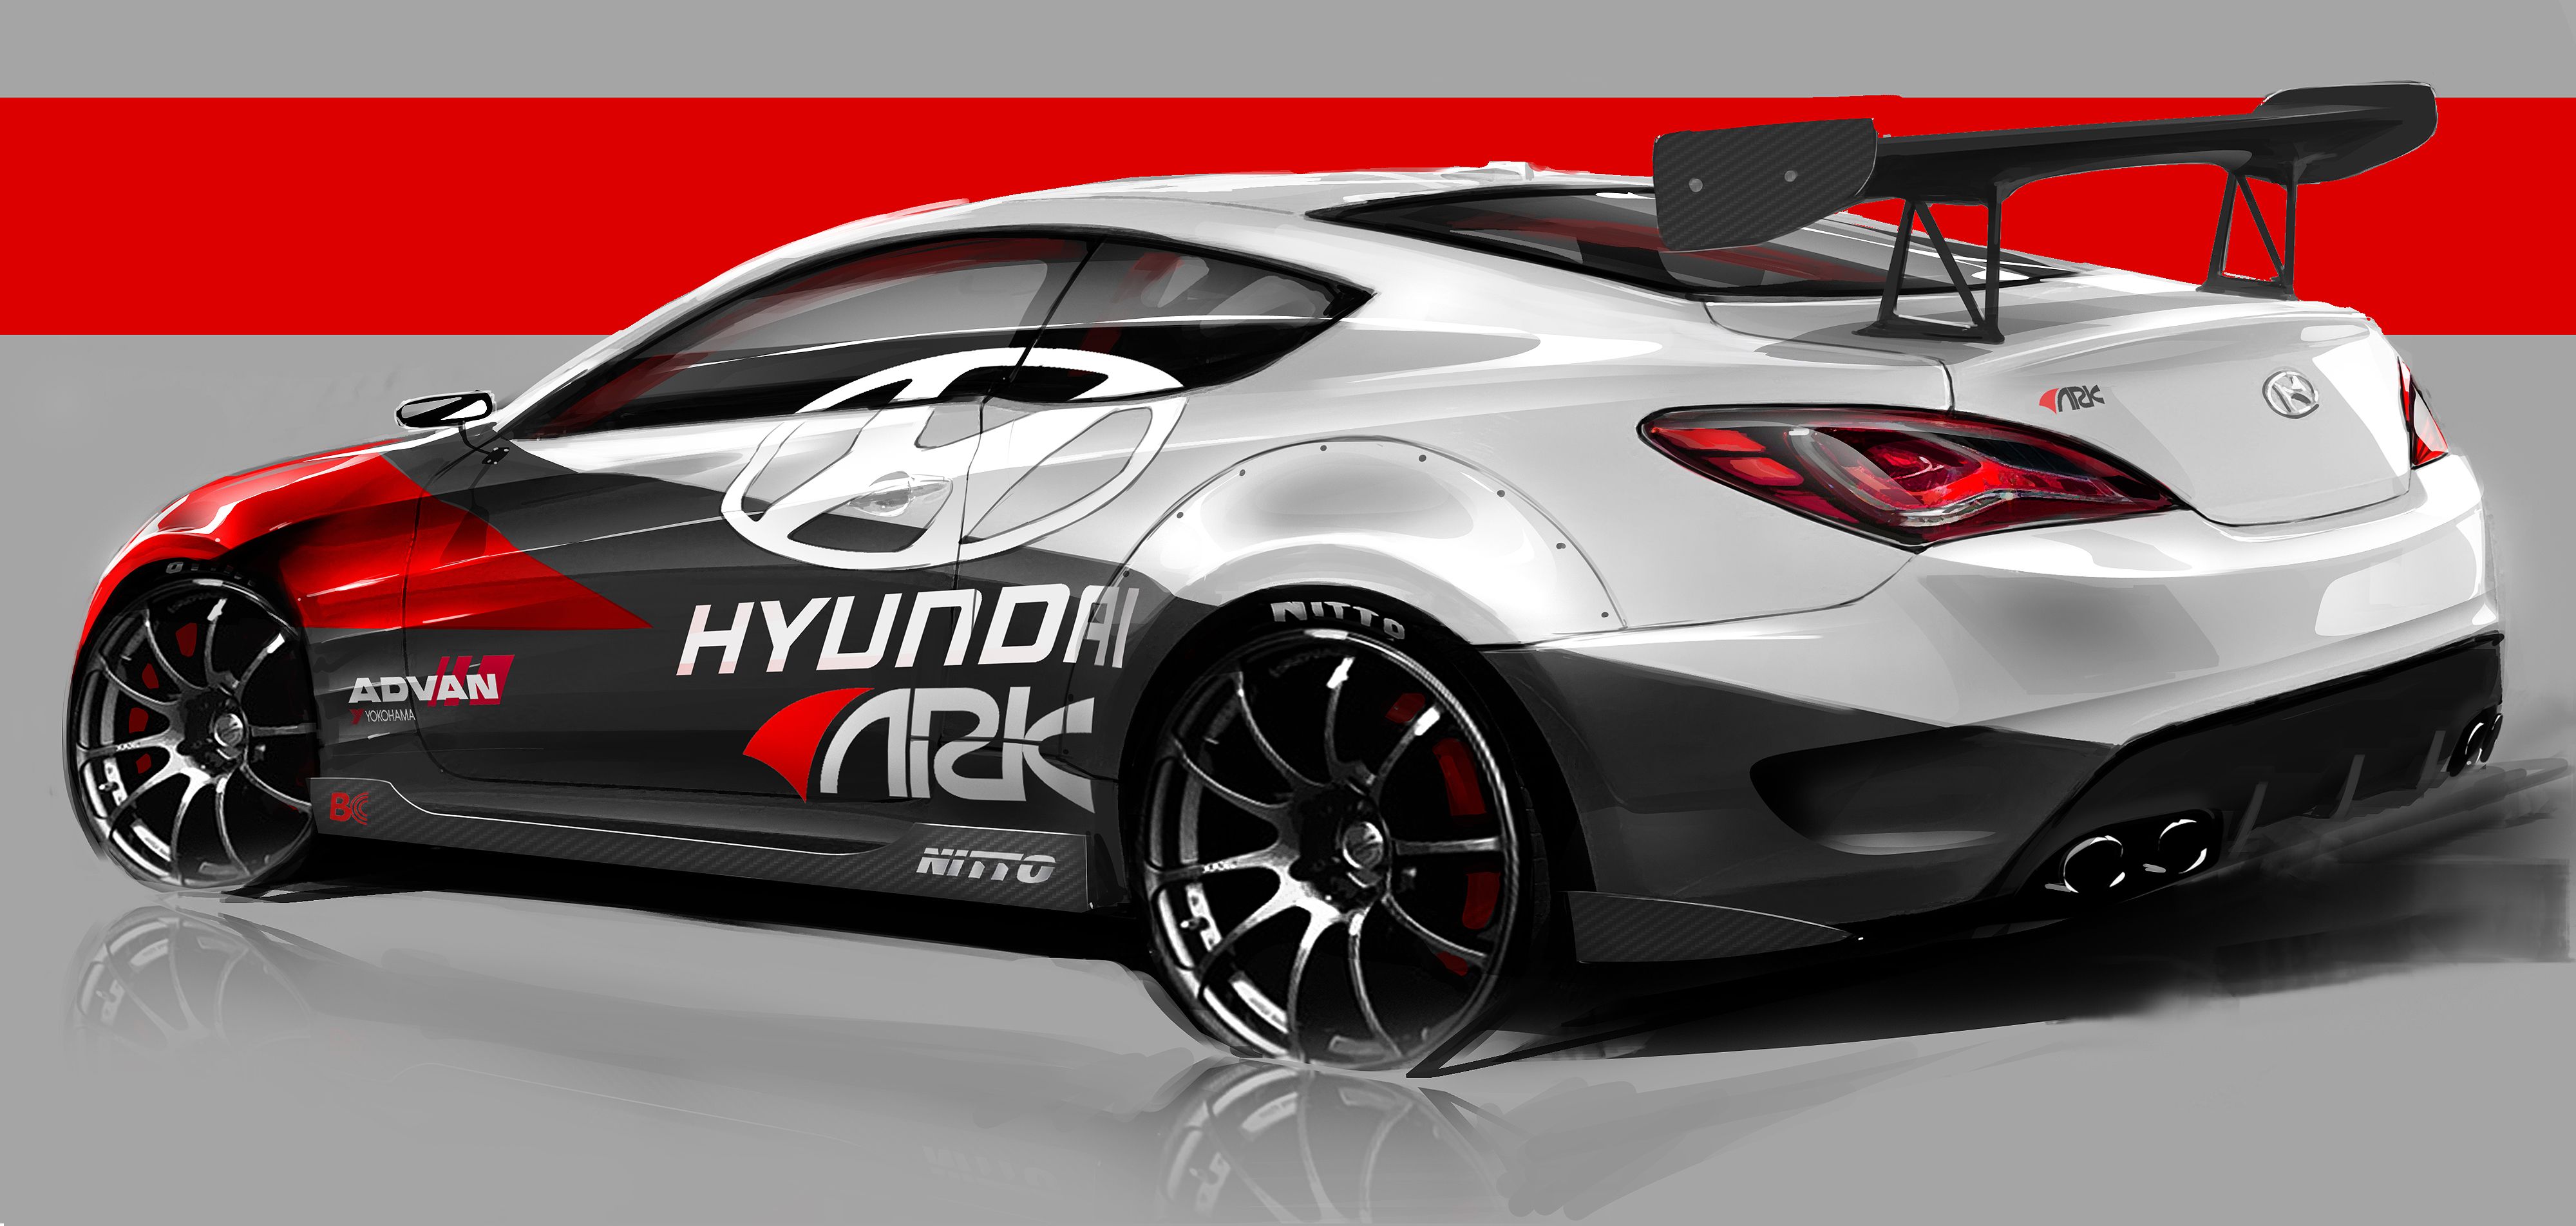 2013 Hyundai Genesis Coupe R-Spec by ARK